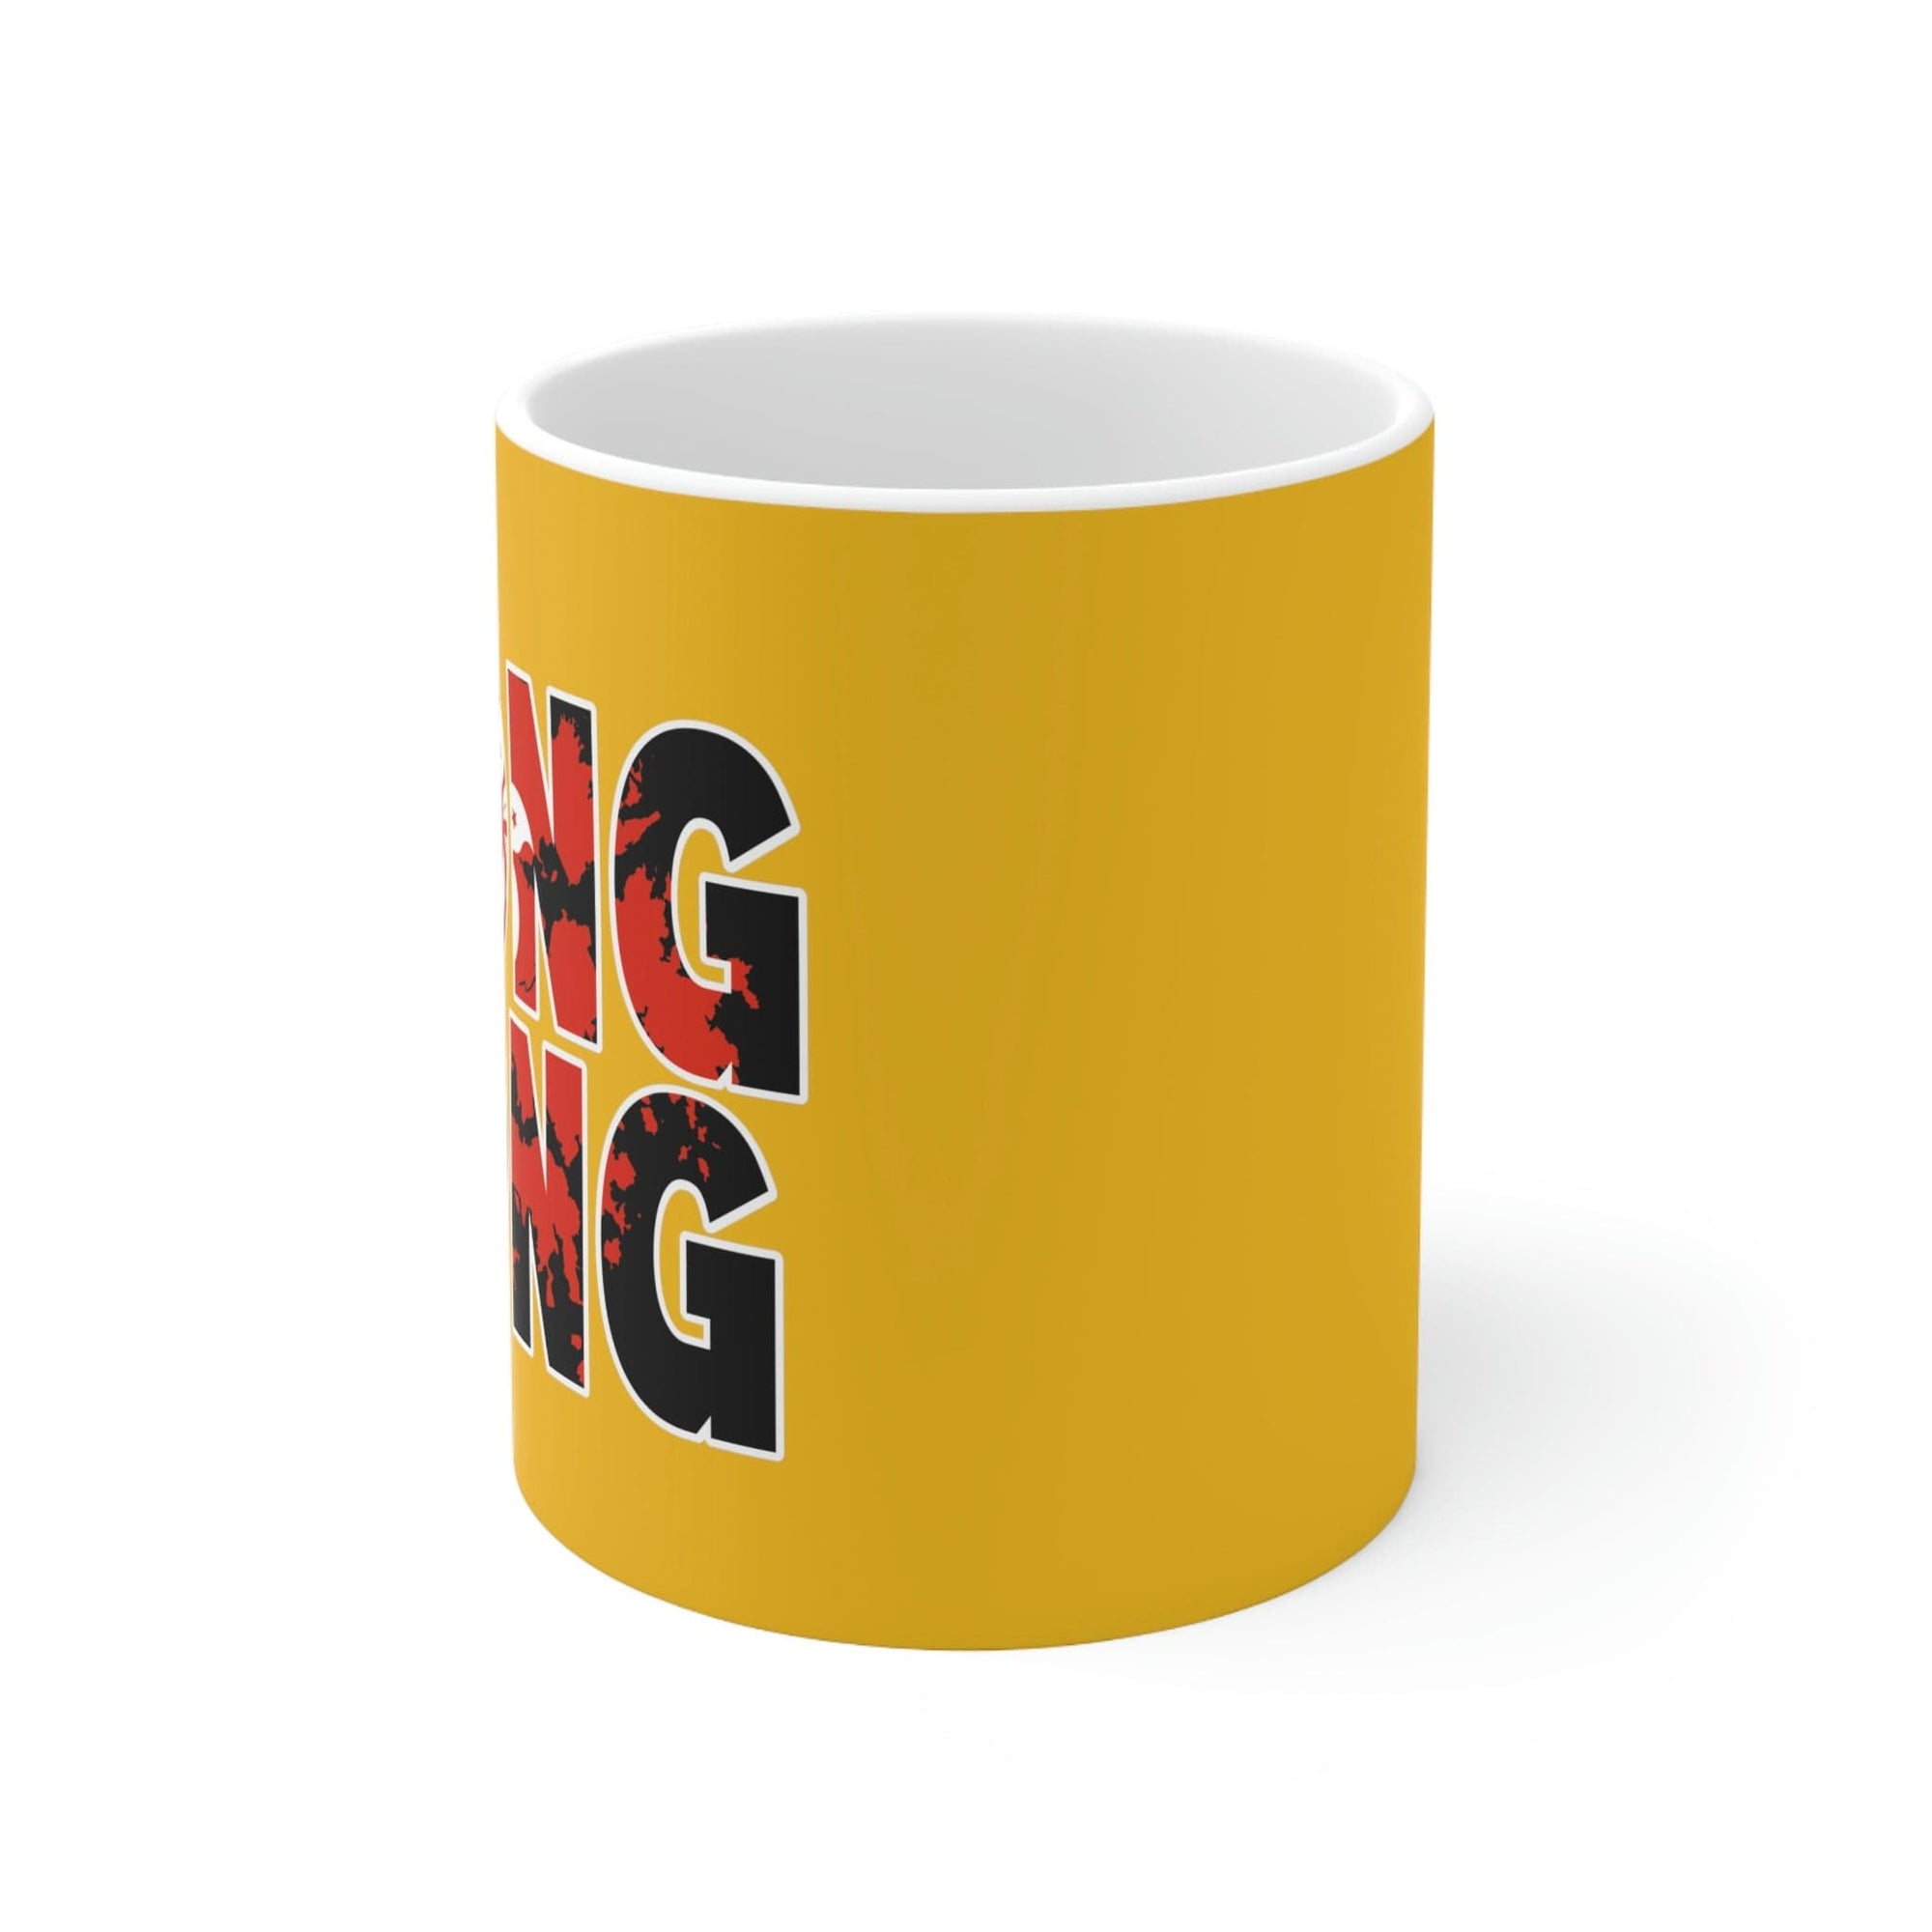 HONG KONG - Awesome Ceramic Mug, Exclusive Design